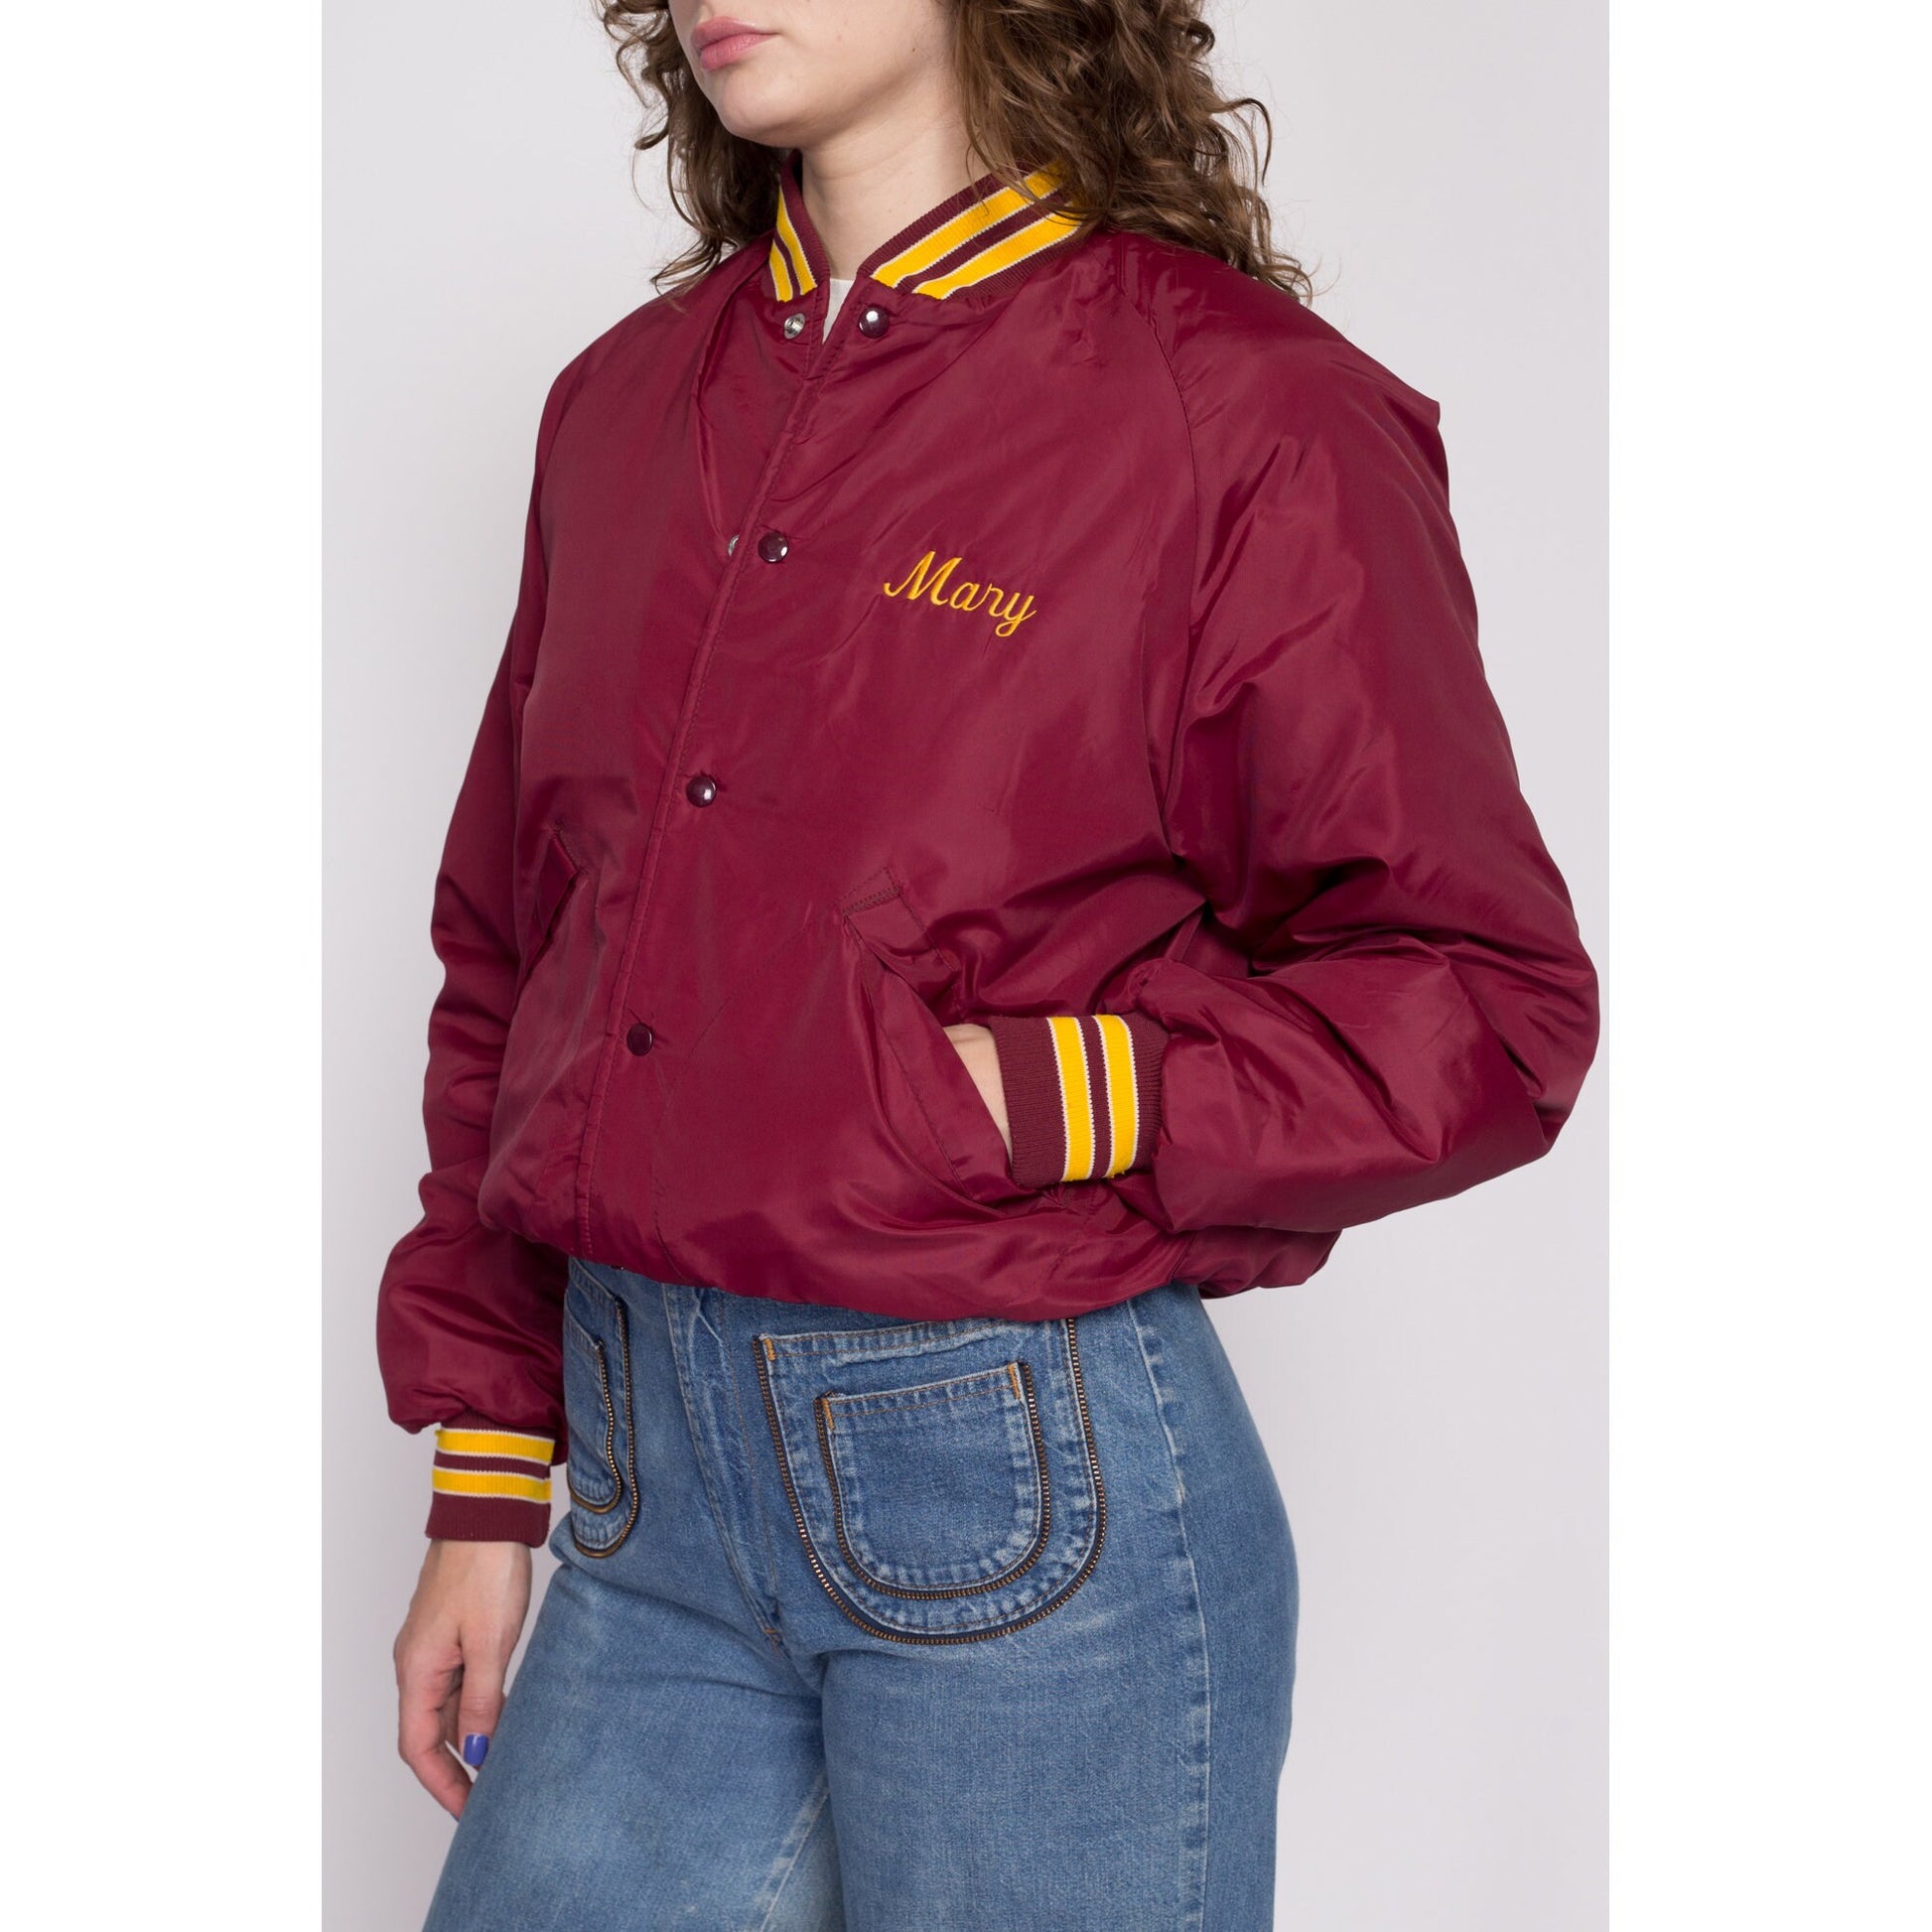 M| 80s Crawler Welding Uniform Varsity Jacket - Men's Medium | Vintage "Mary" Maroon Striped Snap Button Bomber Windbreaker